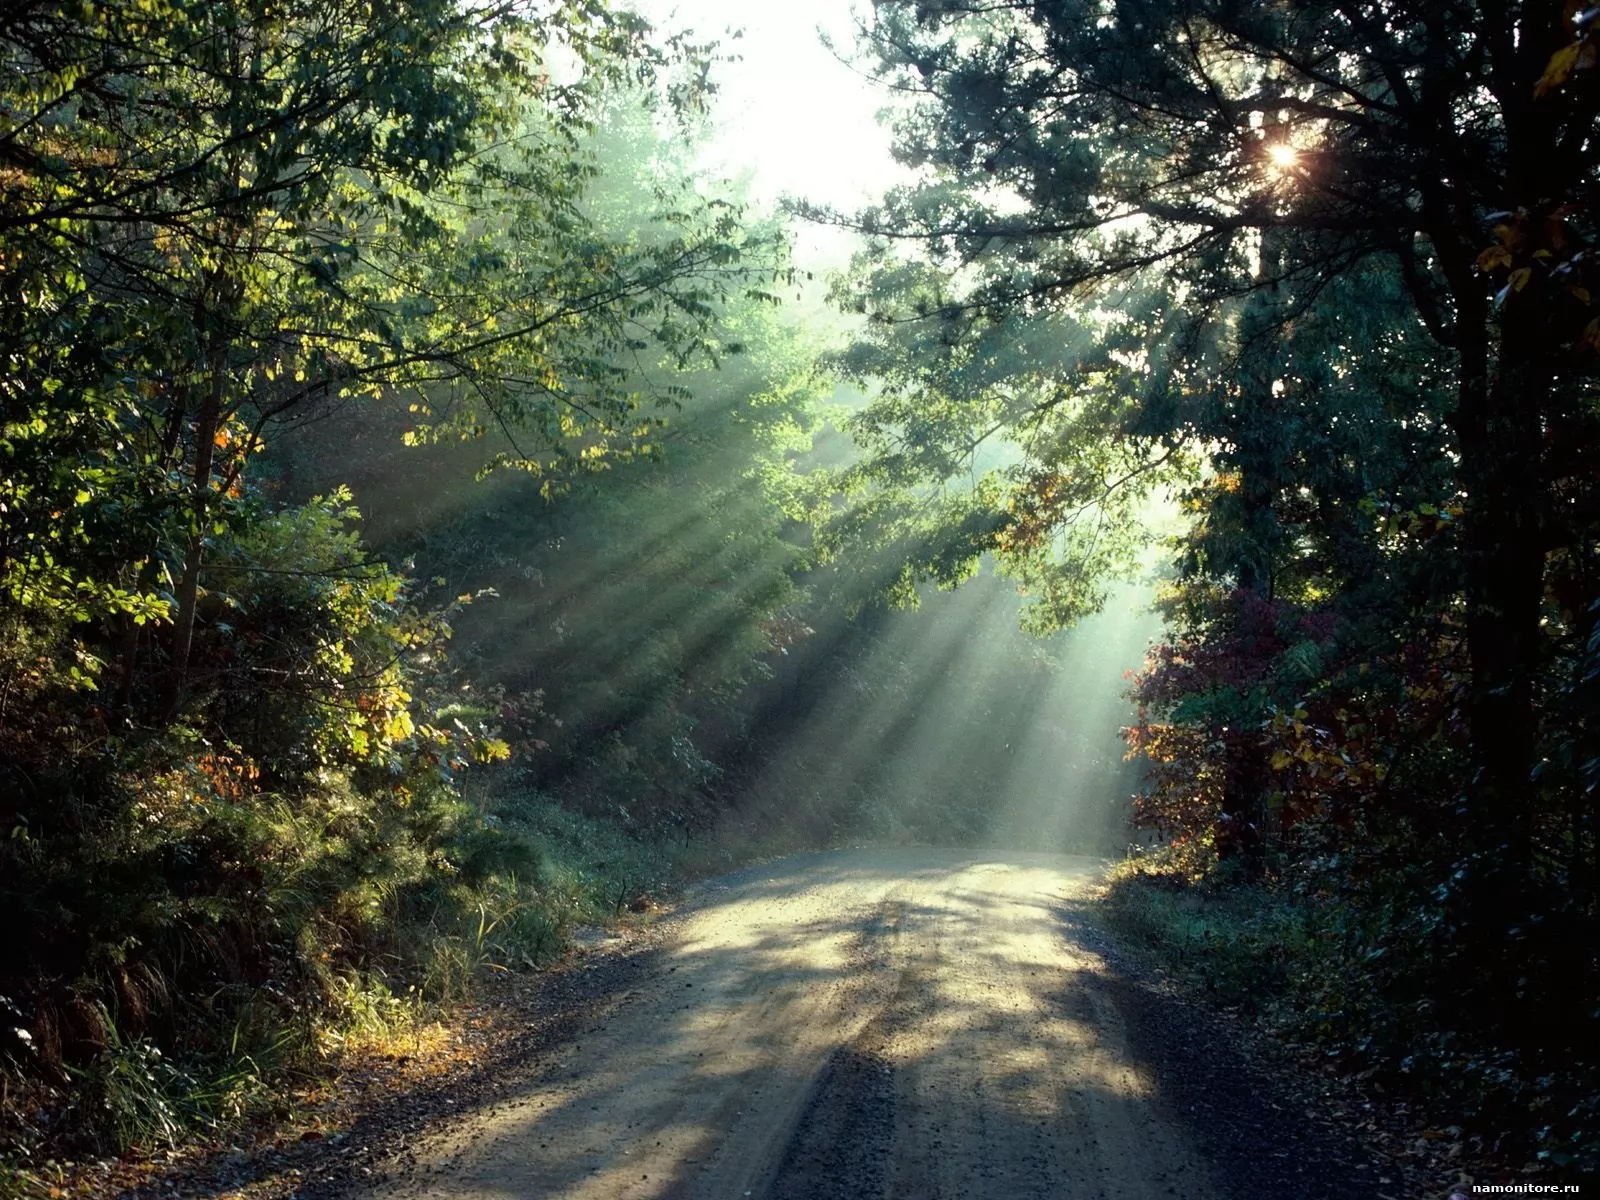 Дорога шла лес озера. Светлая дорога. Лесная дорога. Природа лес дорога. "Солнце в лесу".